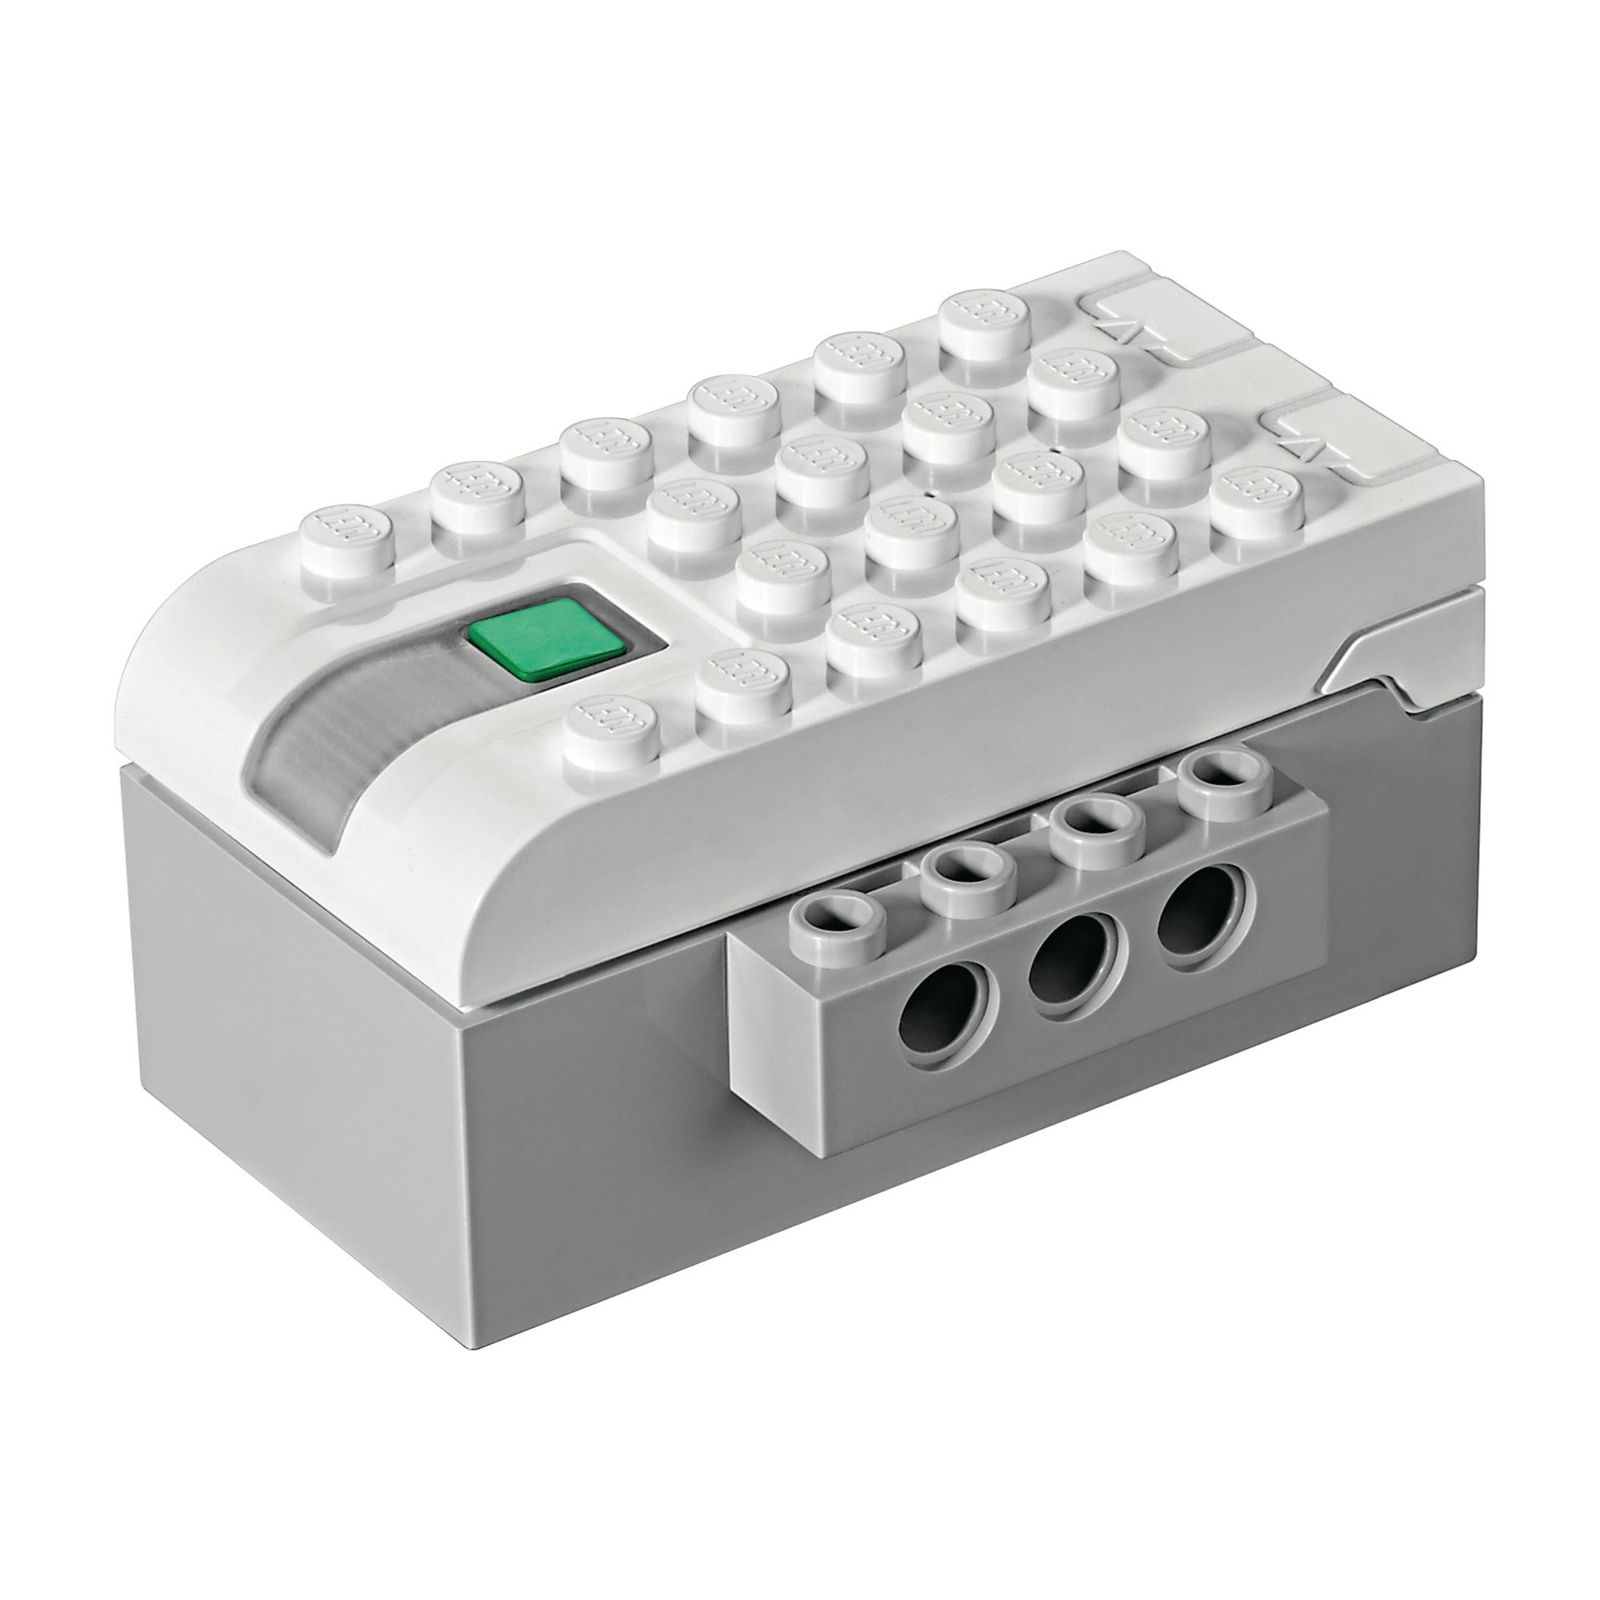 WeDo 2.0 Smart Hub LEGO® Education